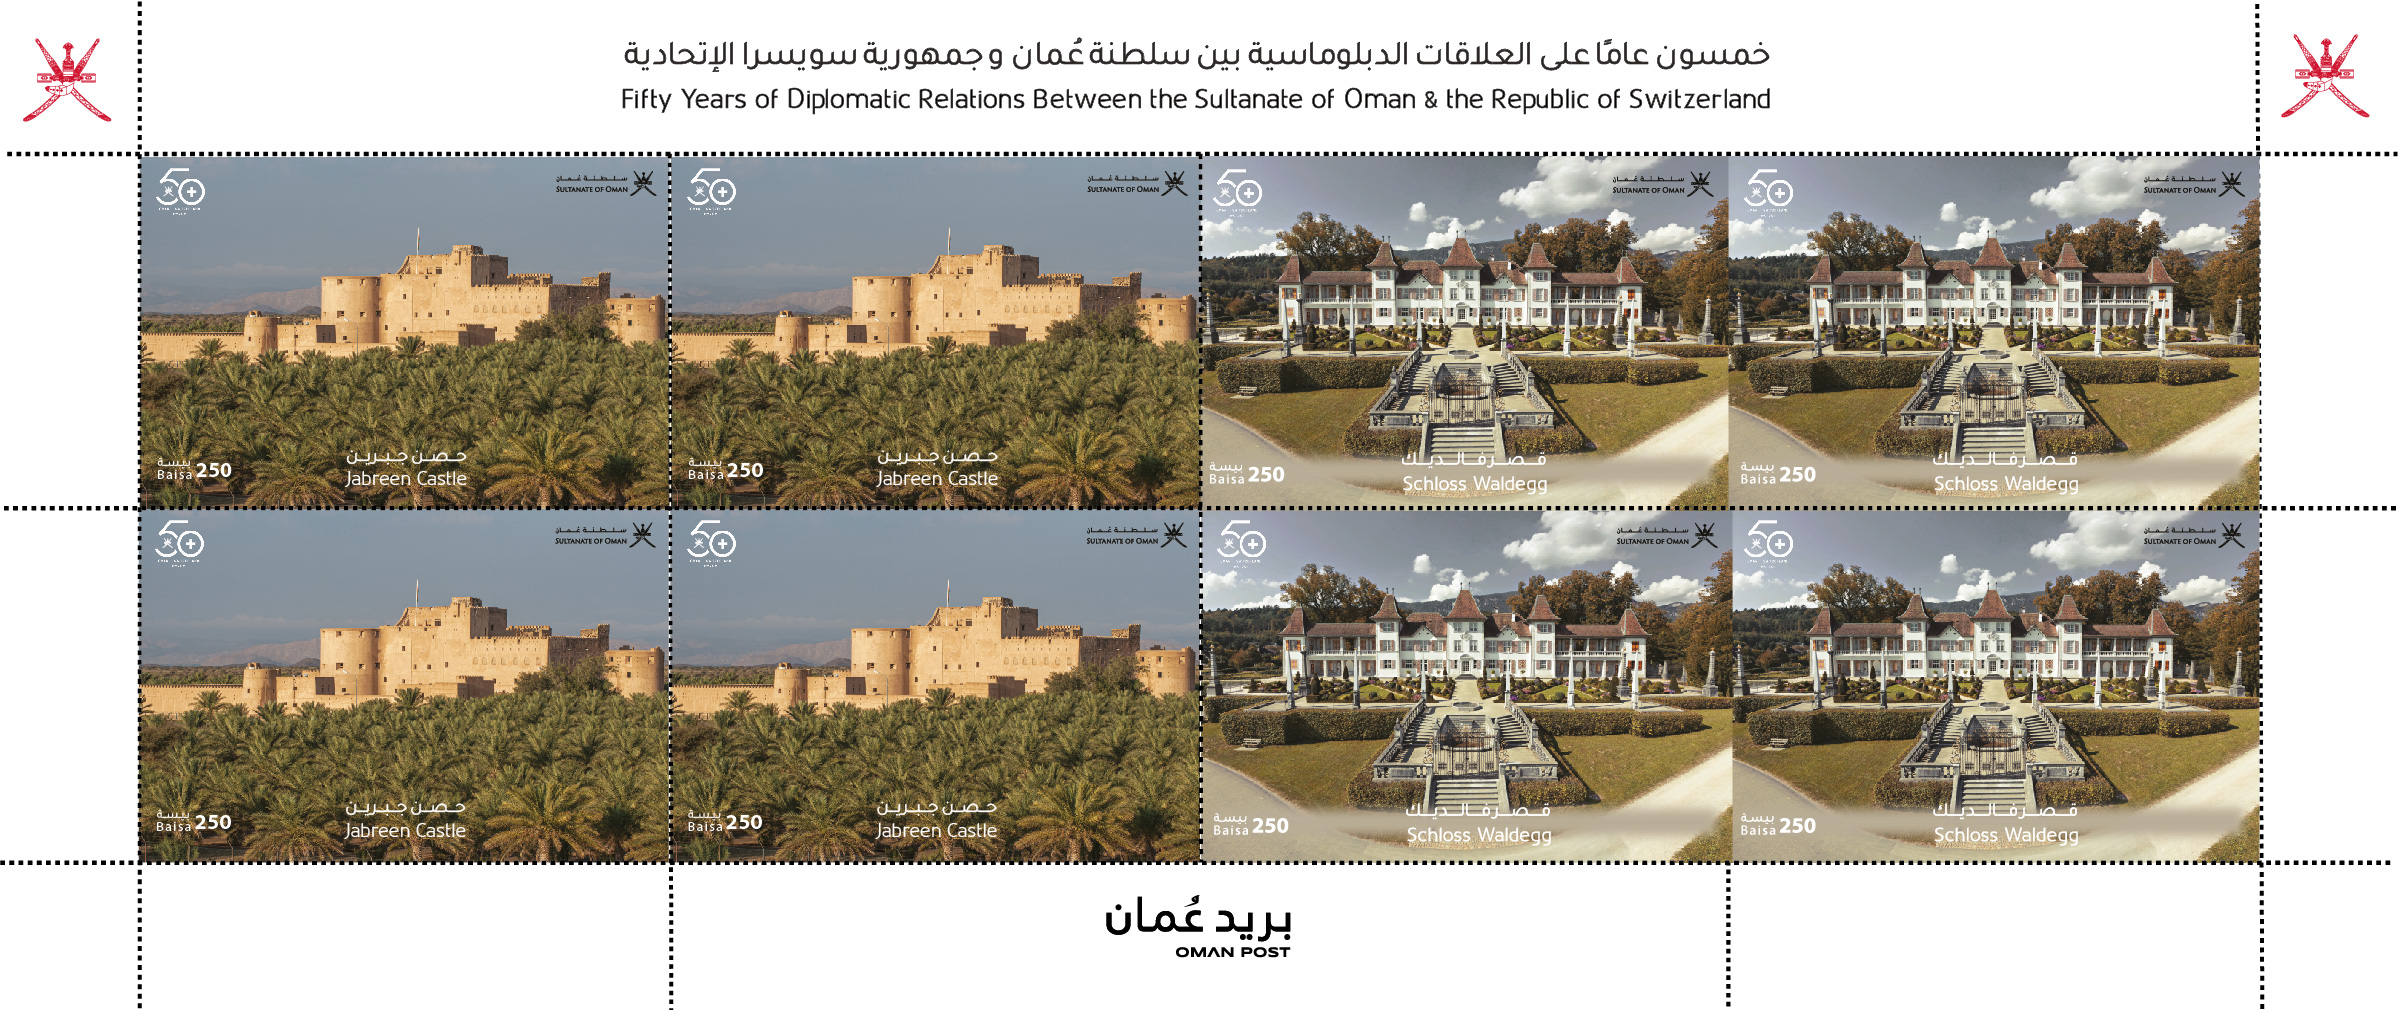 Oman - Swiss Joint Stamp.jpg 